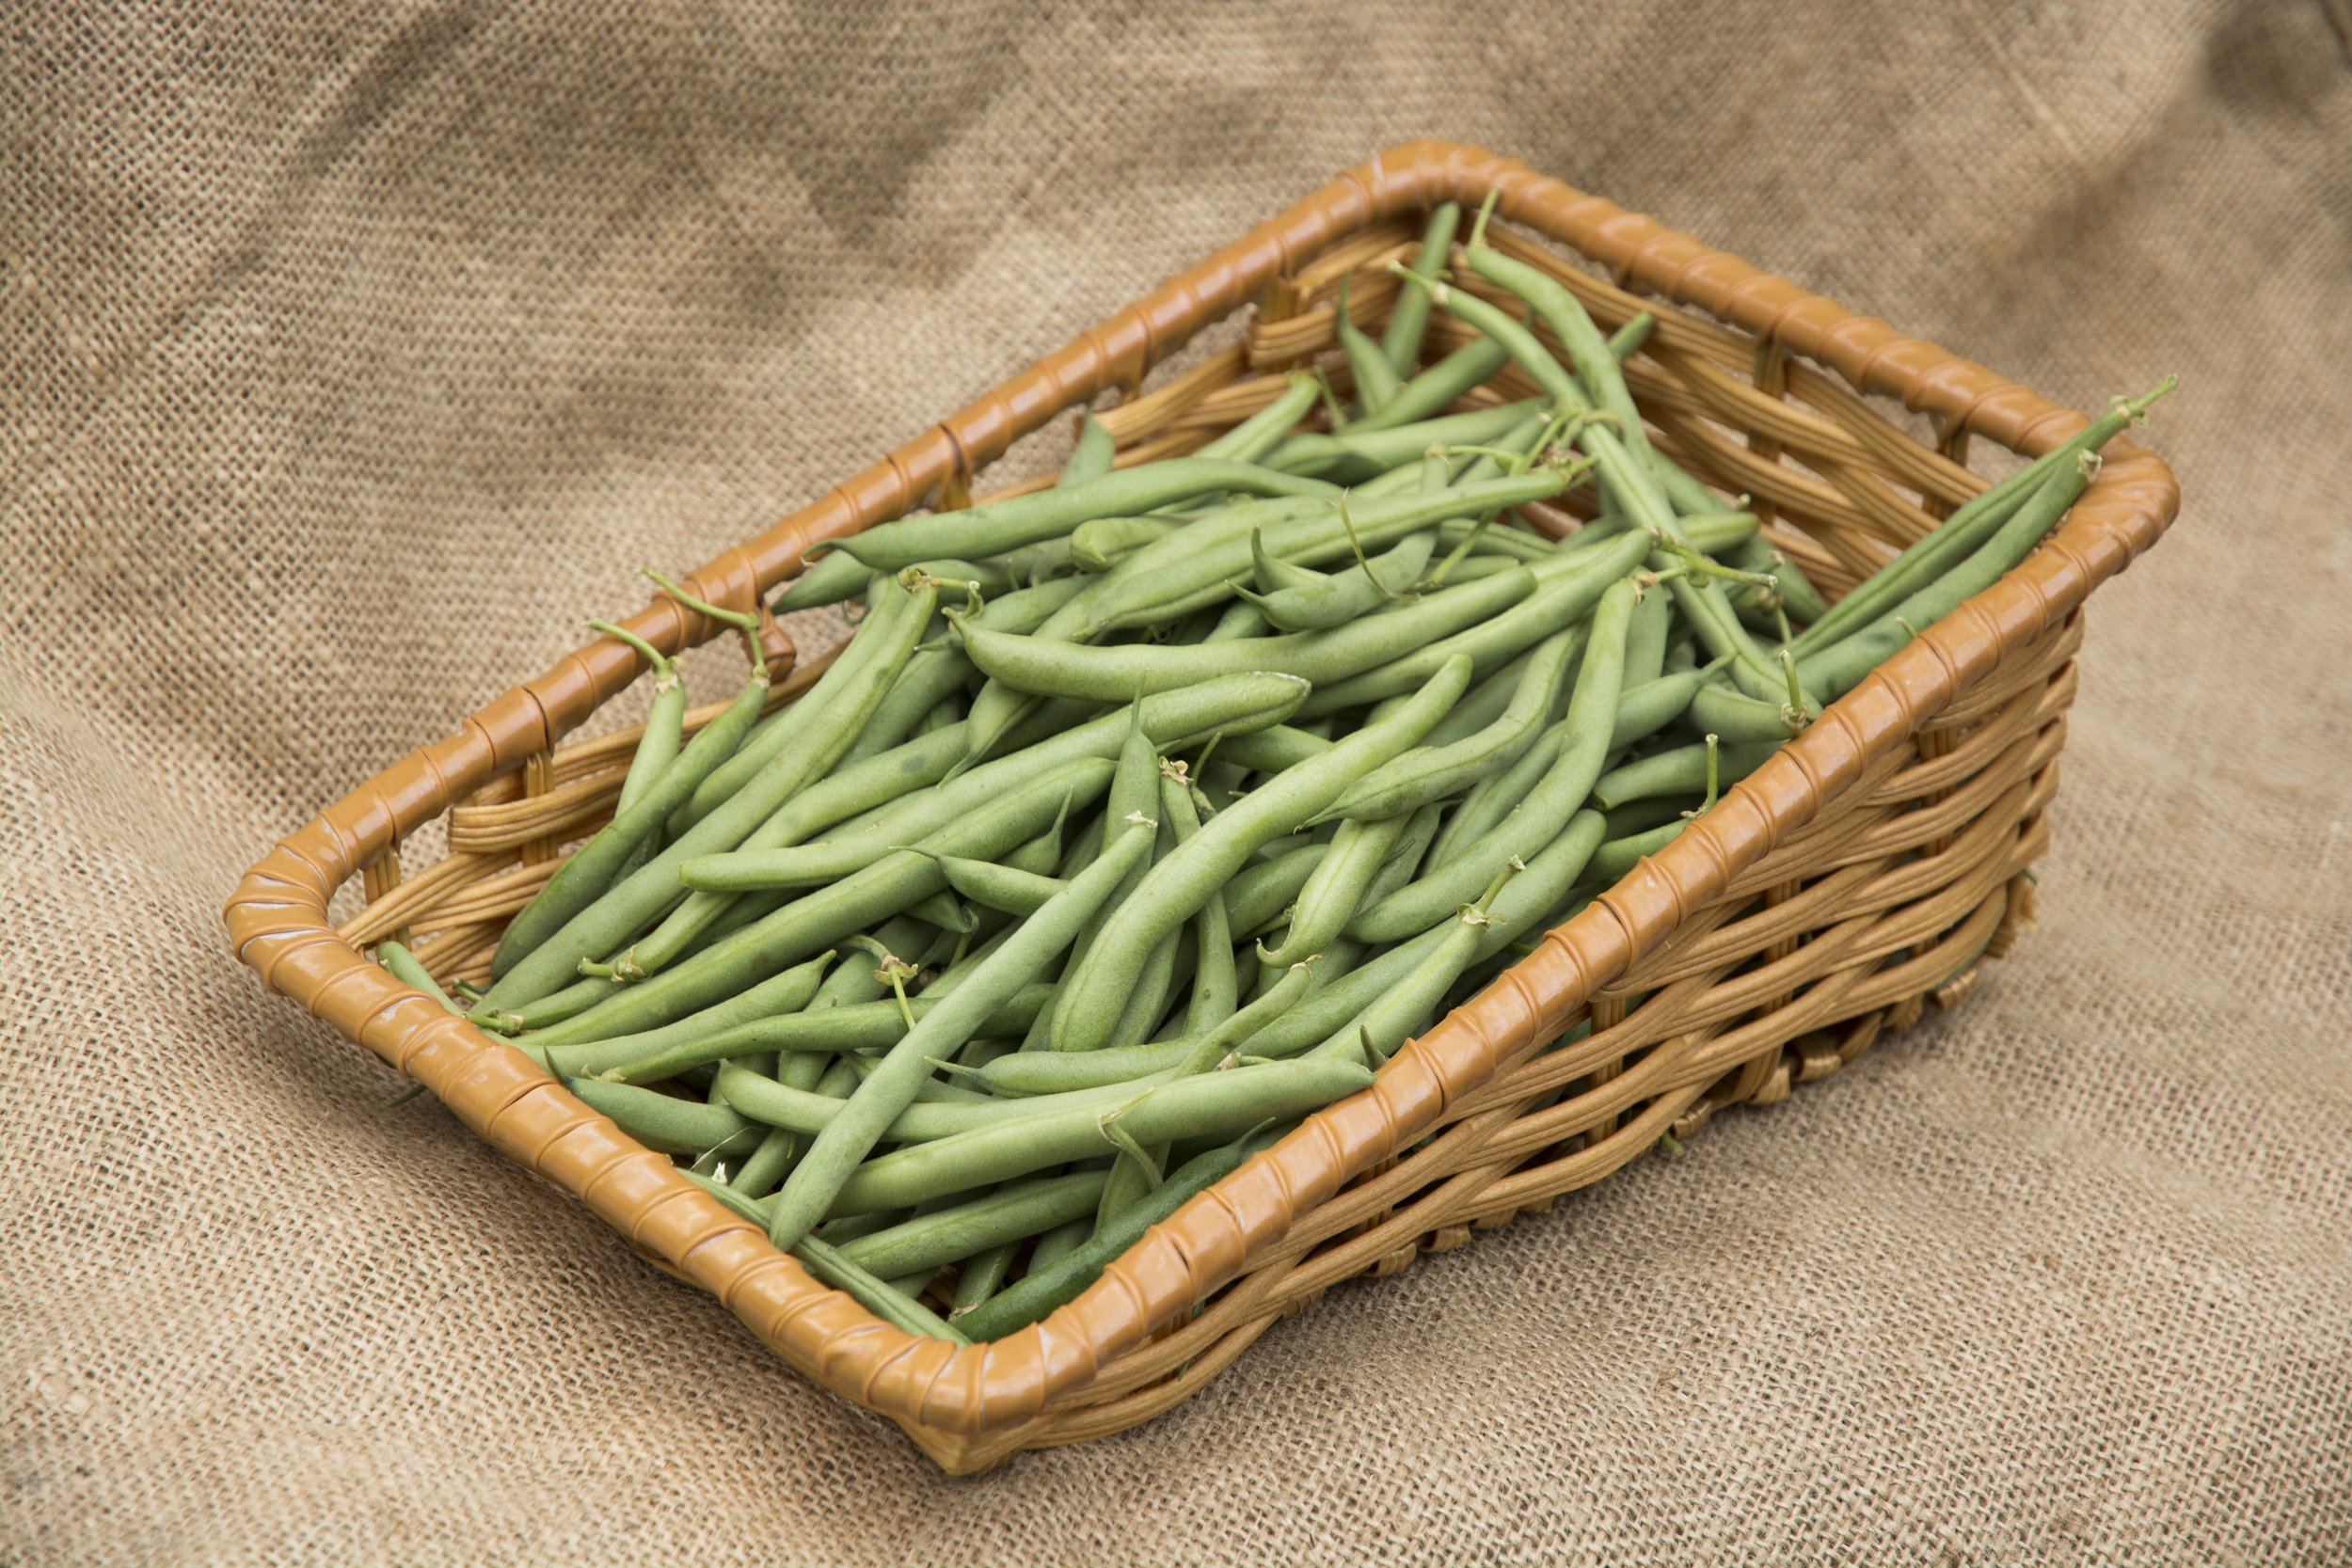 Fair Trade Green Beans $2.29/lb